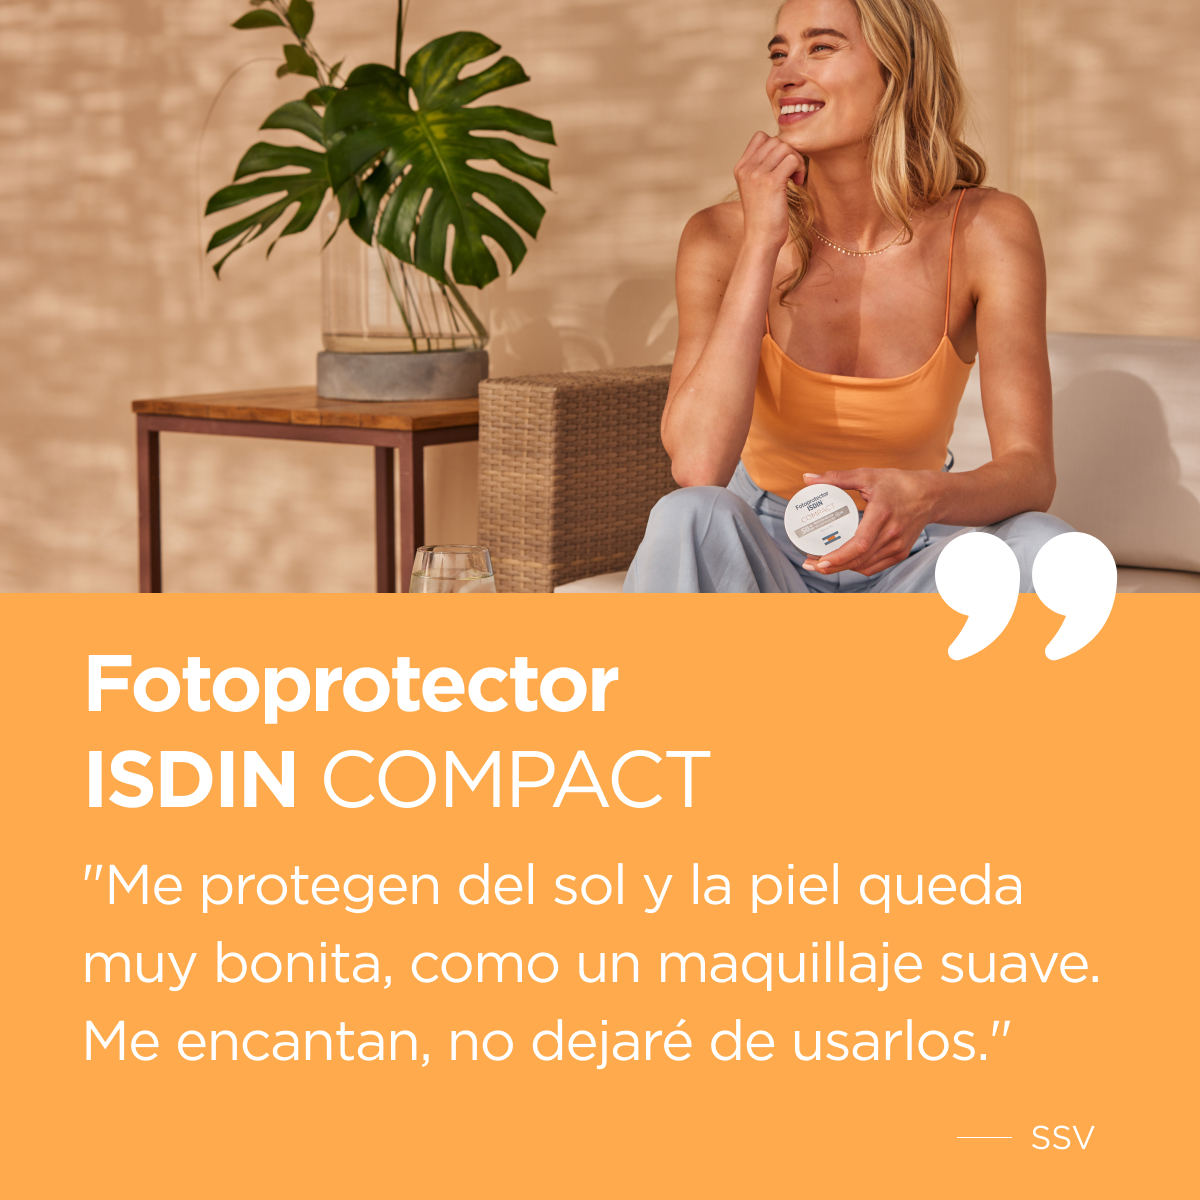 Fotoprotector ISDIN